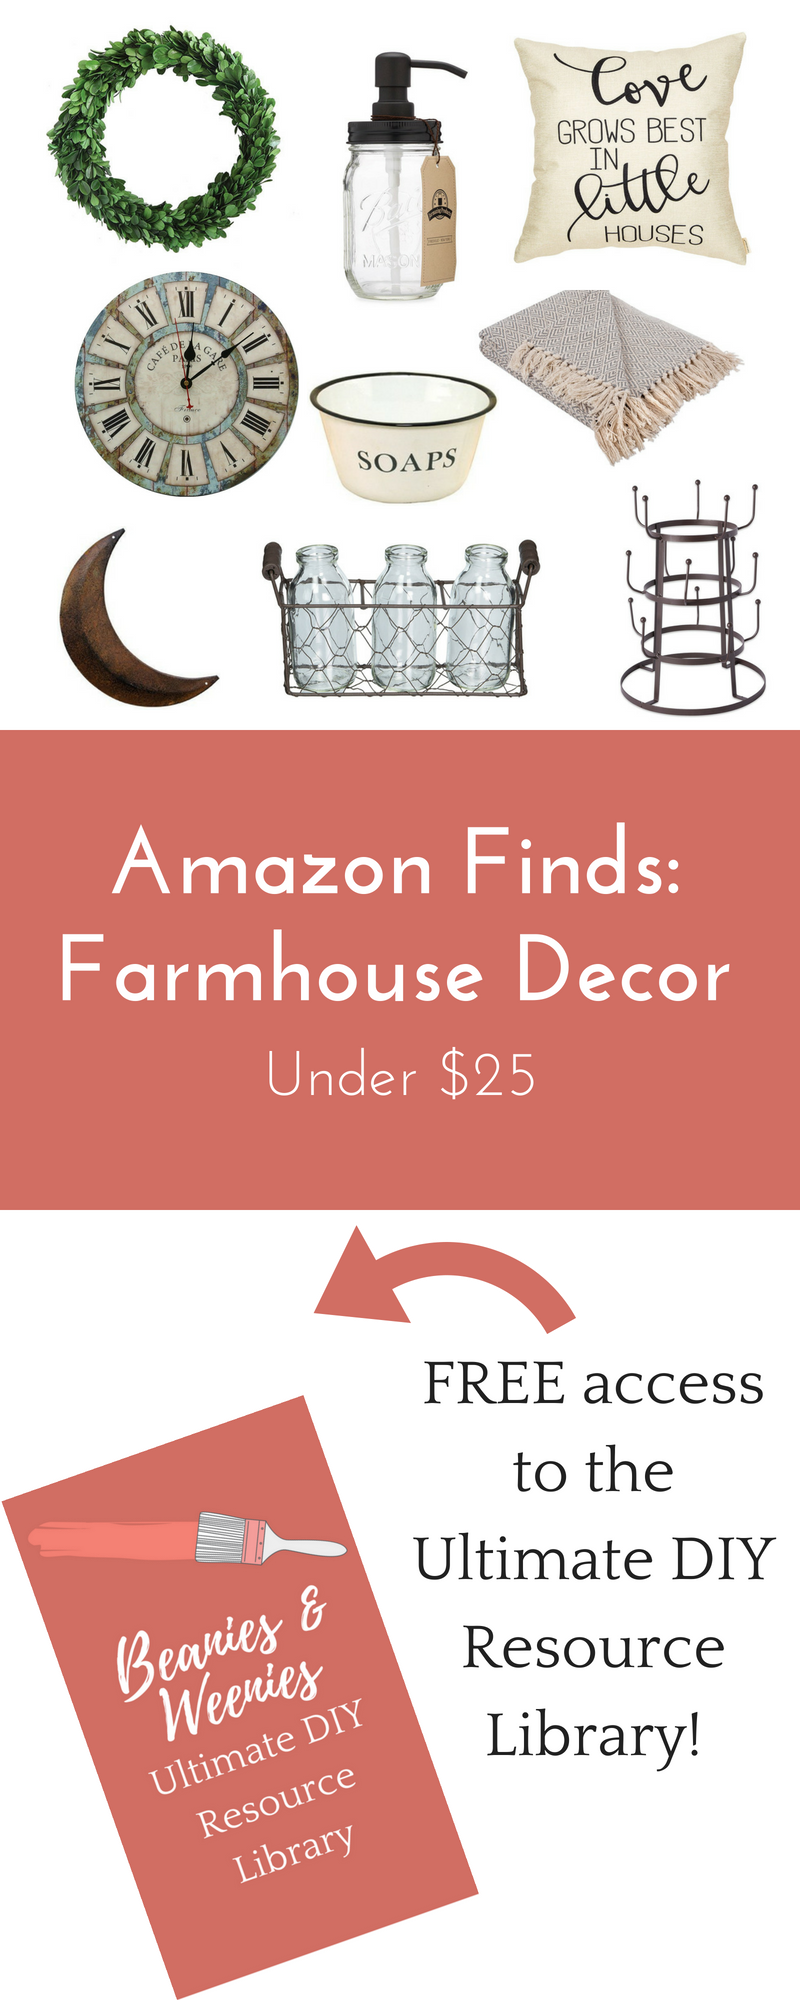 Amazon Finds: farmhouse decor for under $25